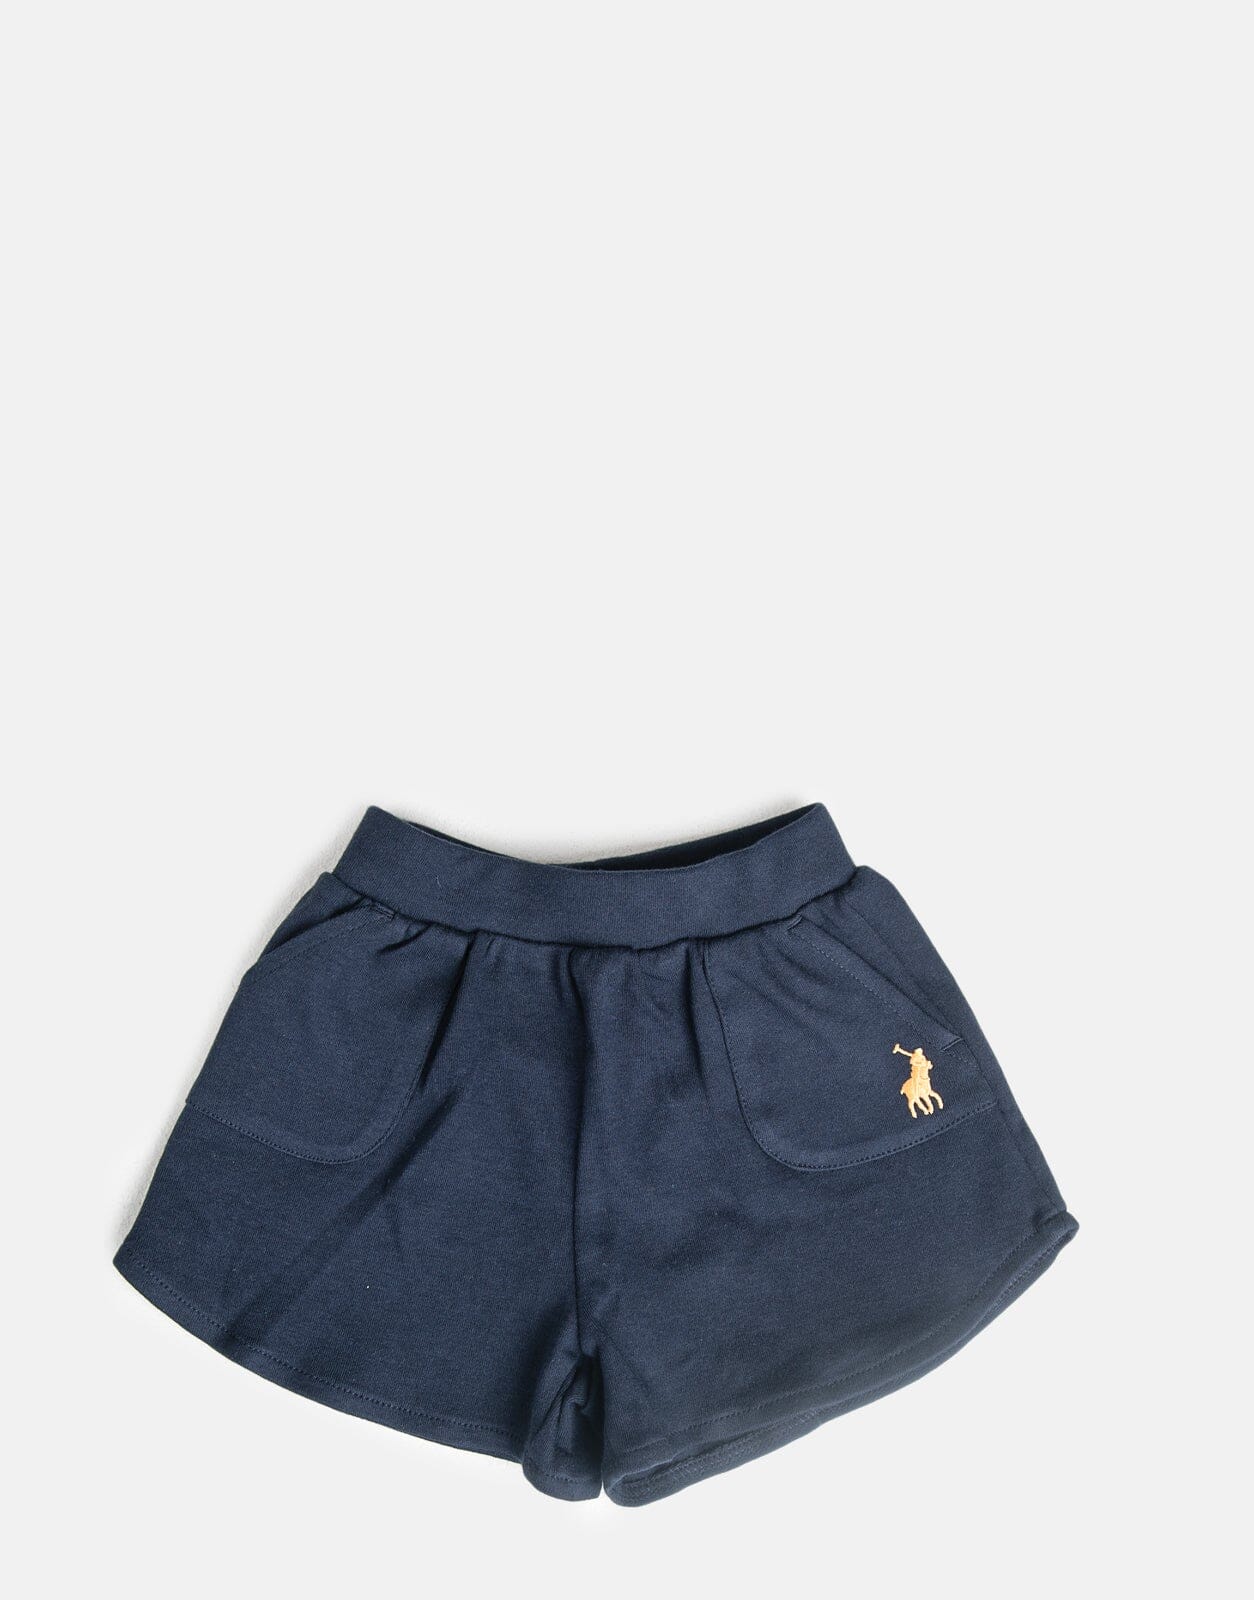 Polo Madison Shorts Navy - Subwear